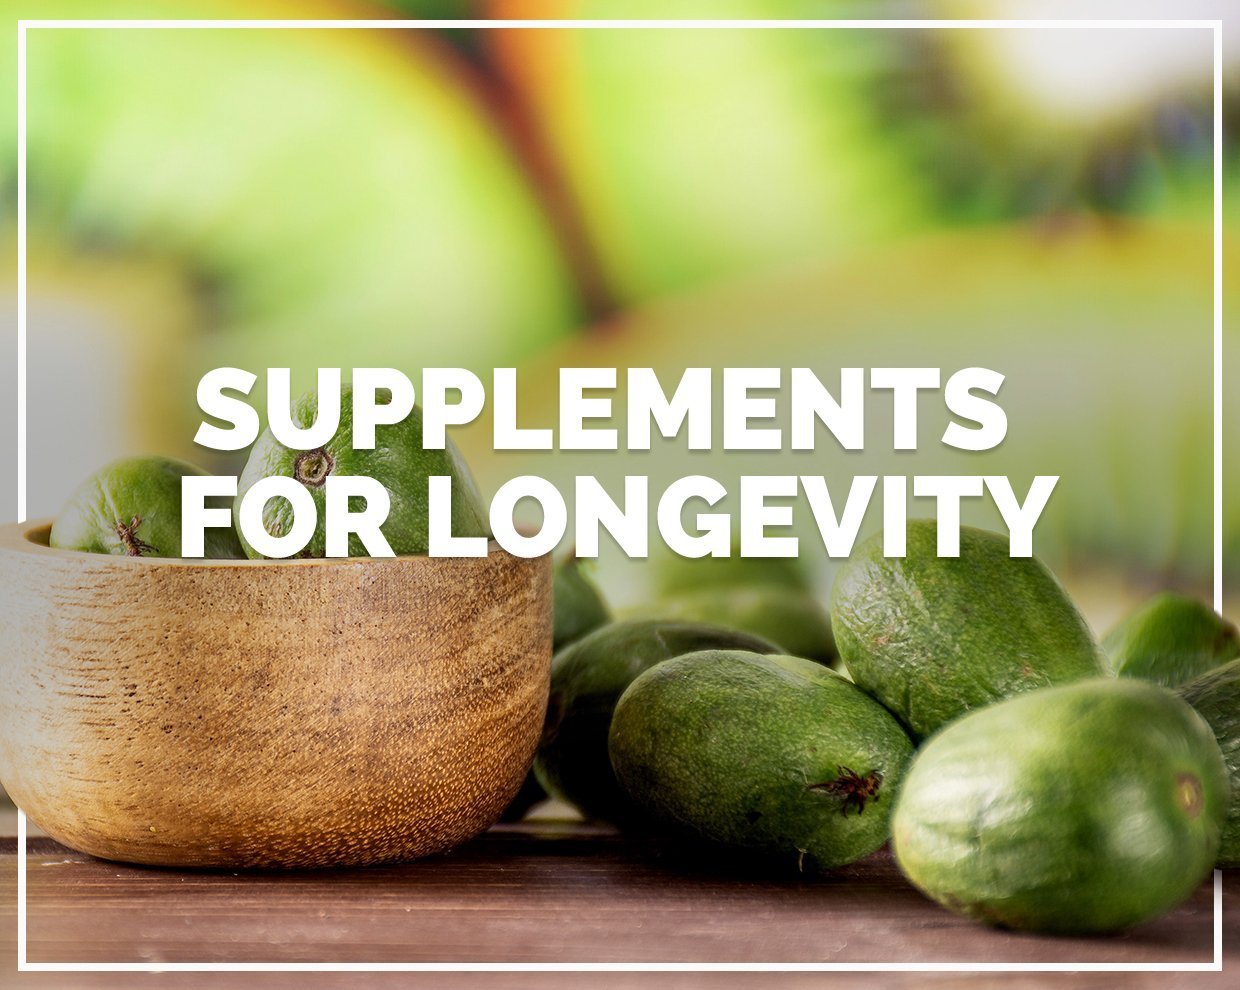 Supplements for longevity